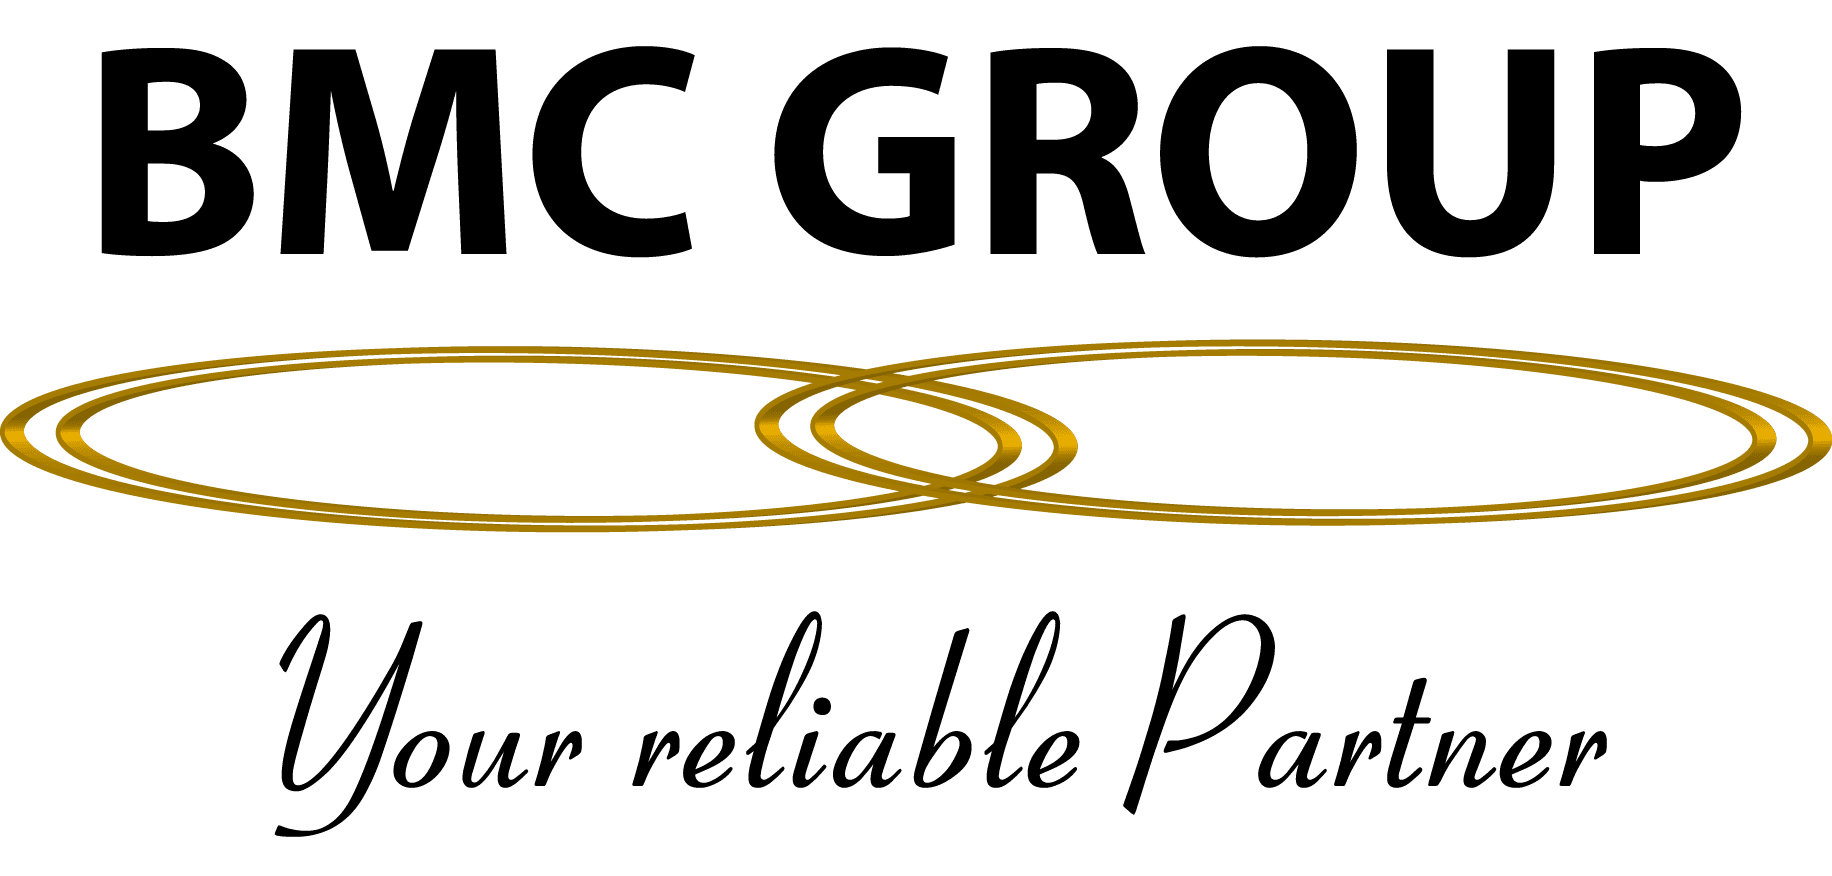 BMC Group - Your Reliable Partner